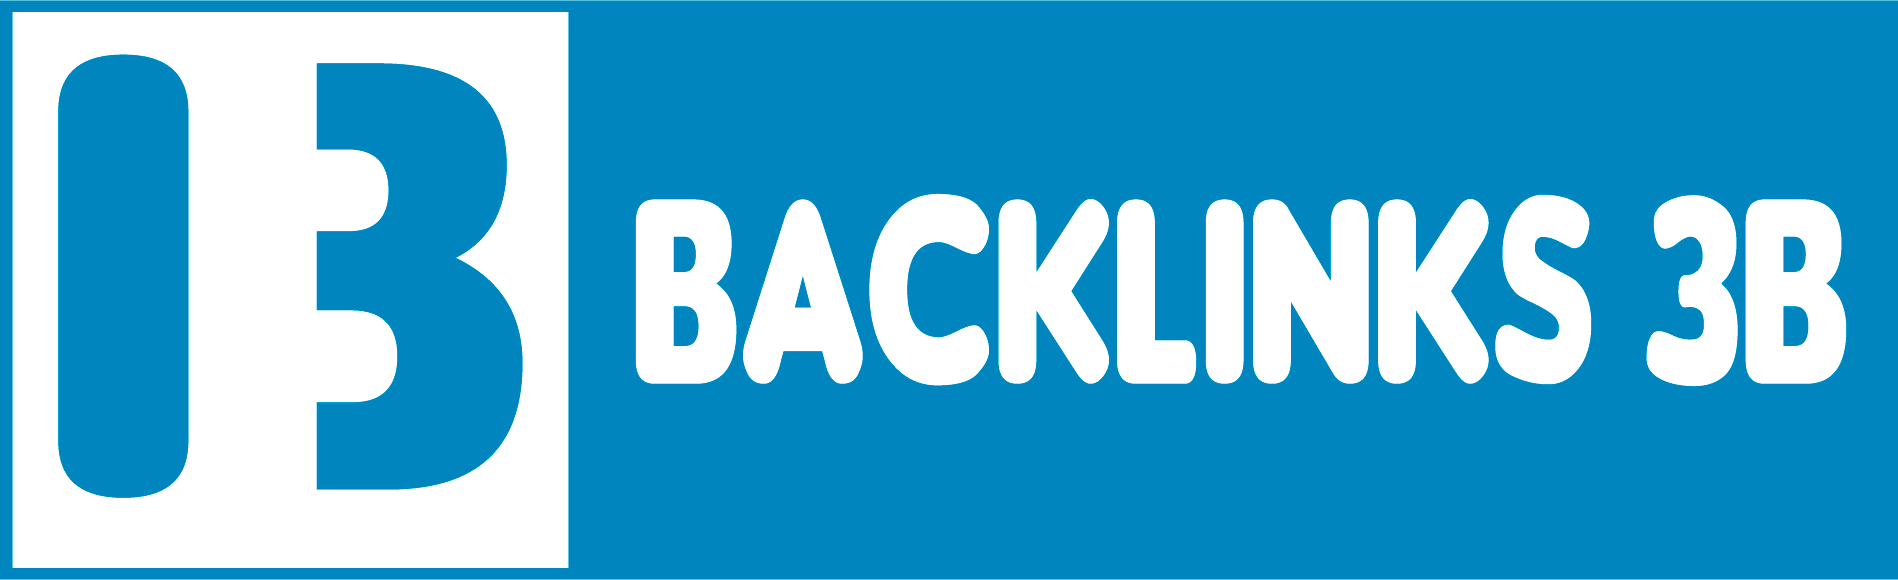 Backlinks 3B